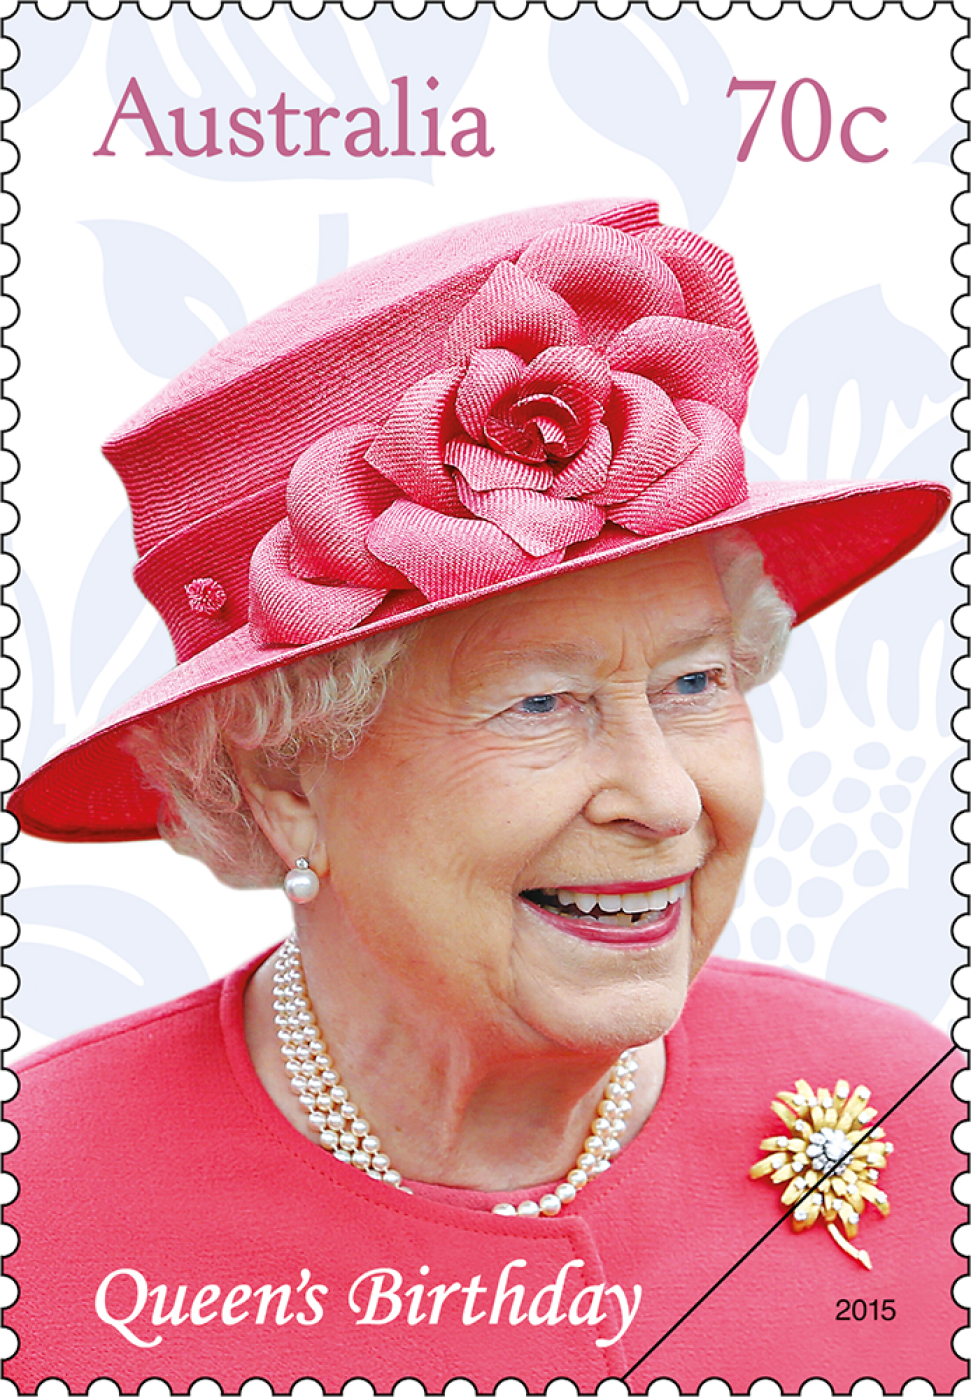 70c Her Majesty Queen Elizabeth II visits Brixton, 2013 stamp